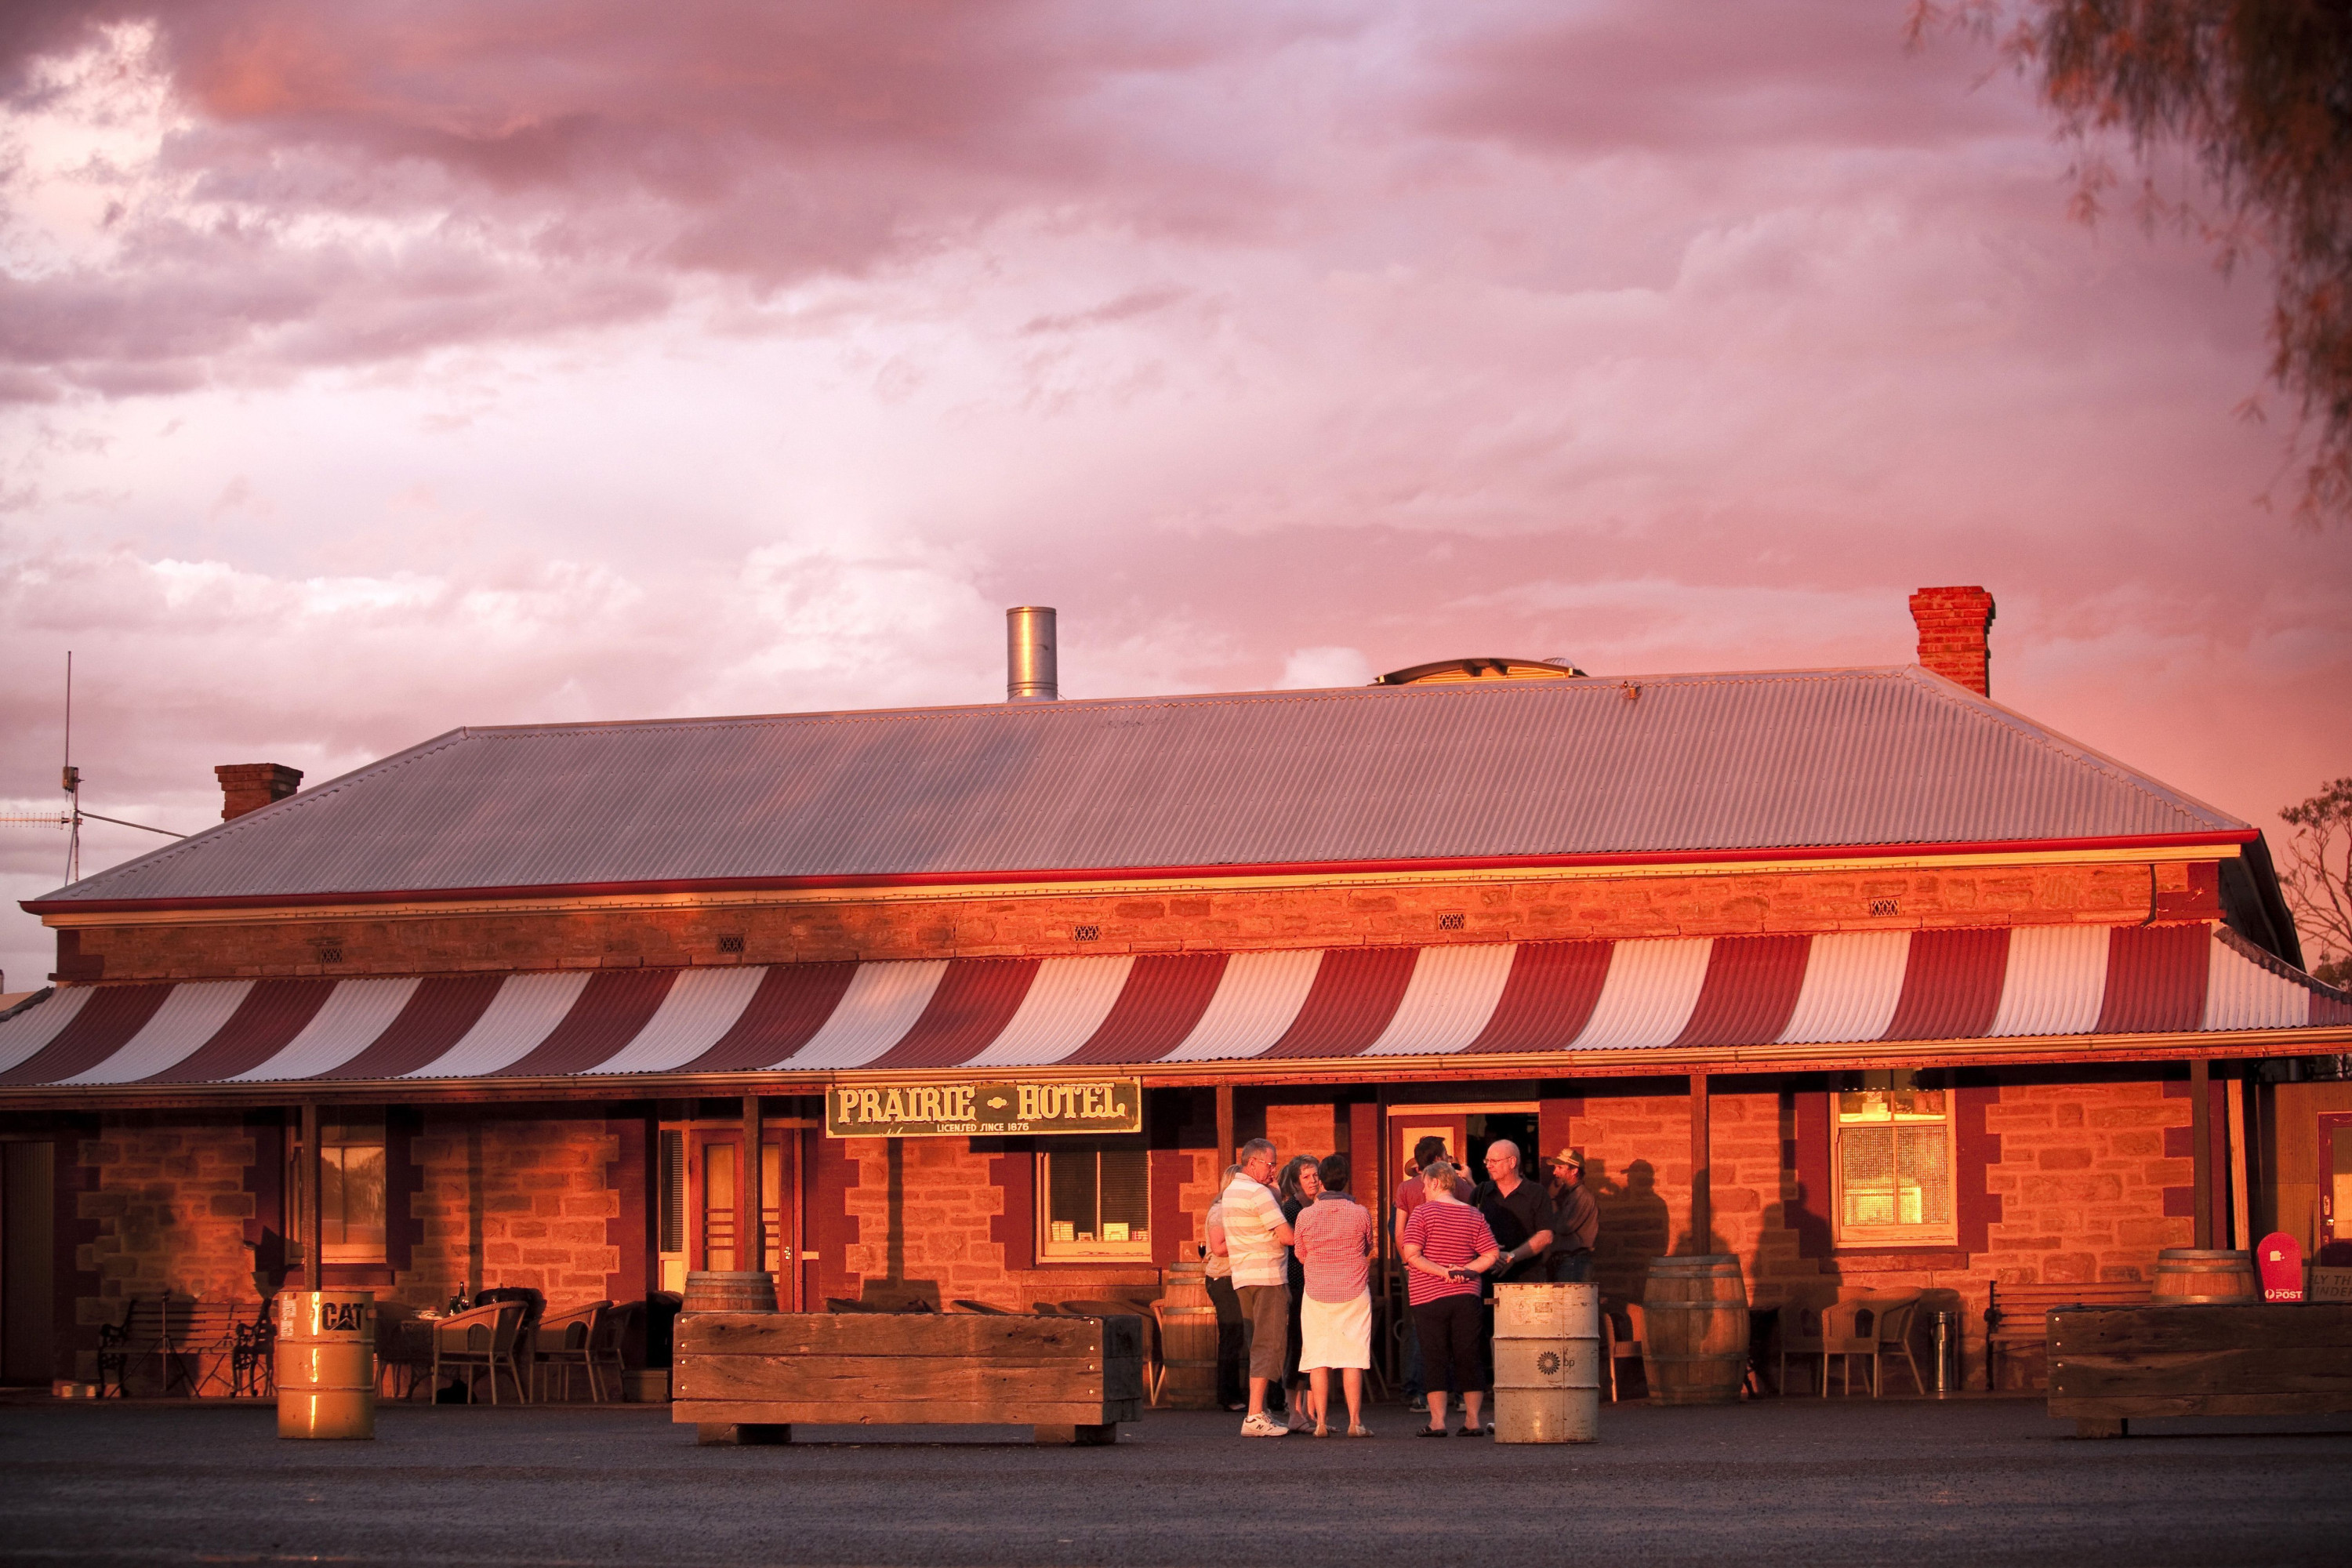 Outback pub at golden hour.